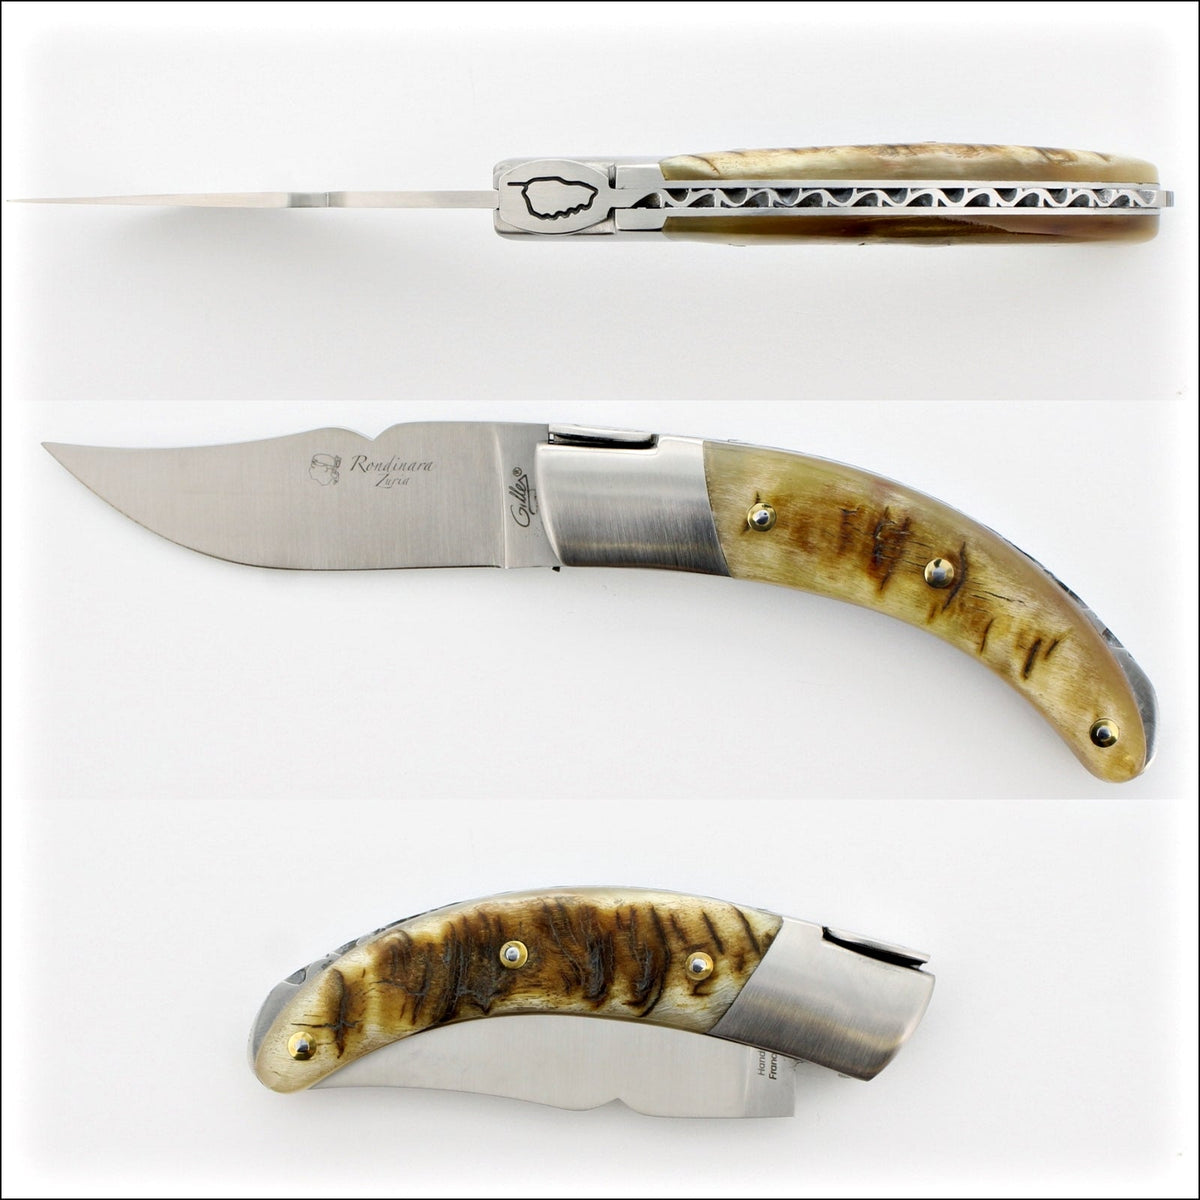 Corsican Rondinara Folding Knife - Ram Horn Tip